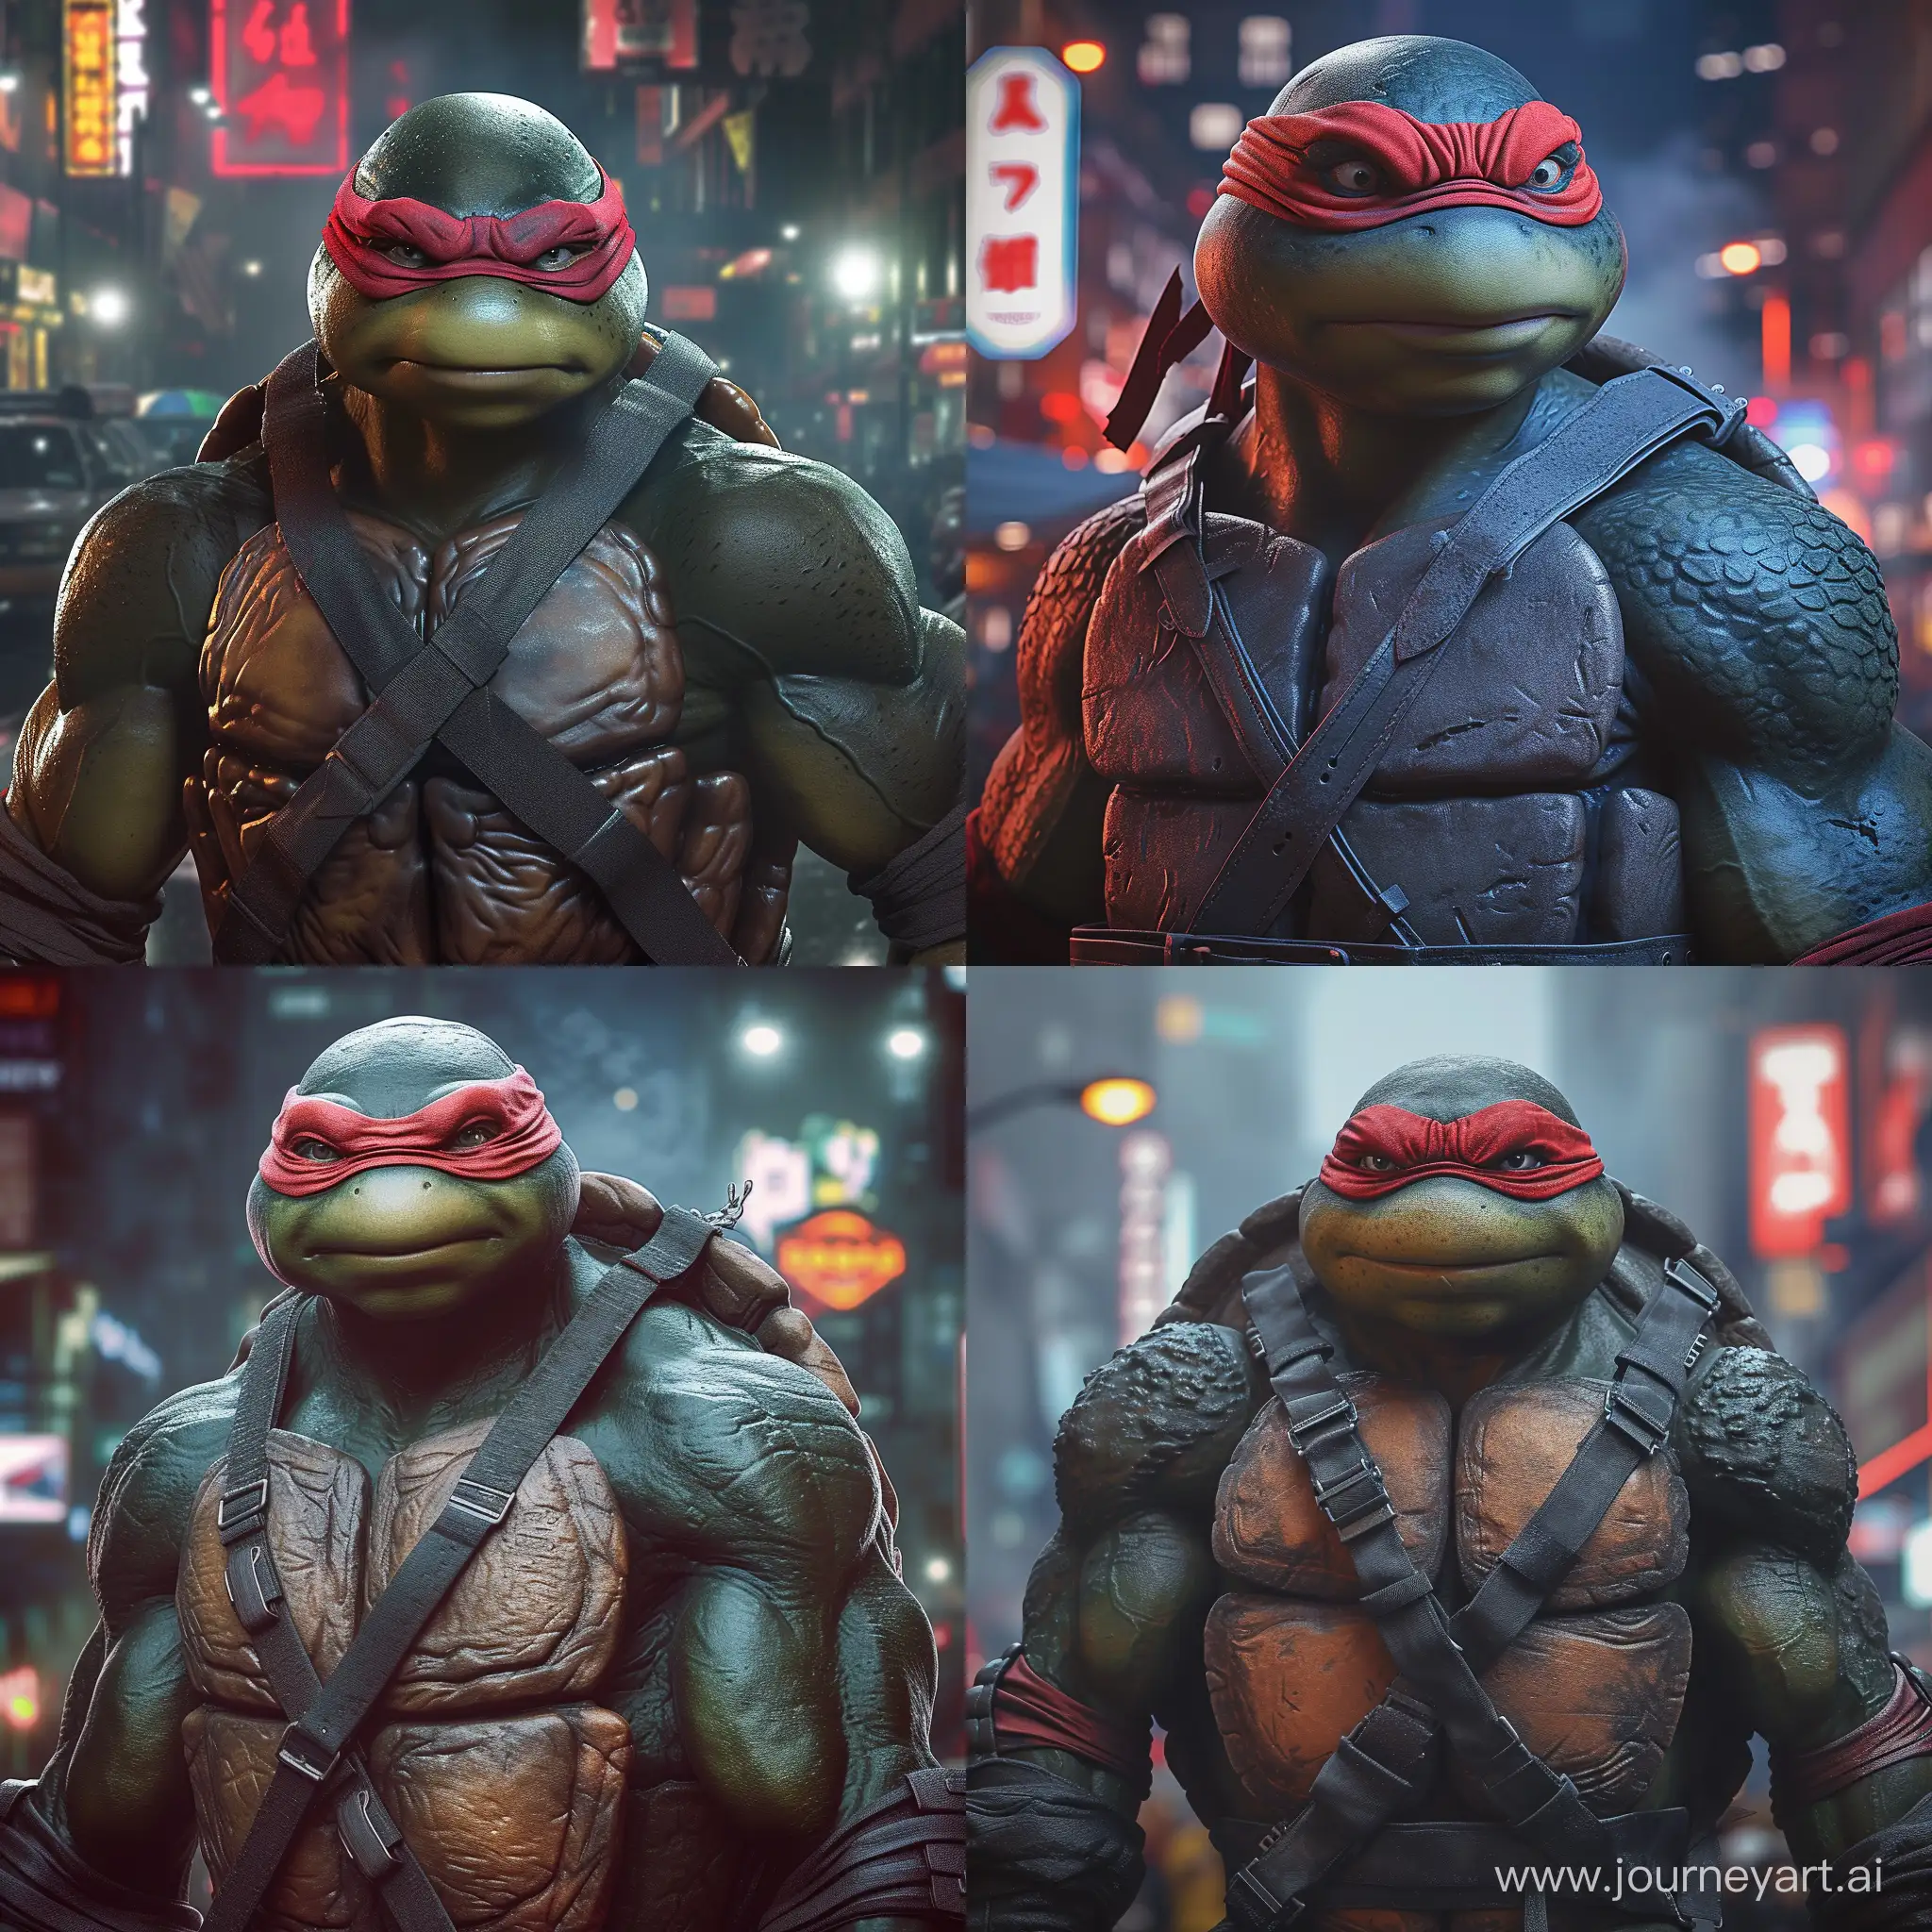 Realistic-Raphael-Teenage-Mutant-Ninja-Turtle-in-Urban-Night-Scene